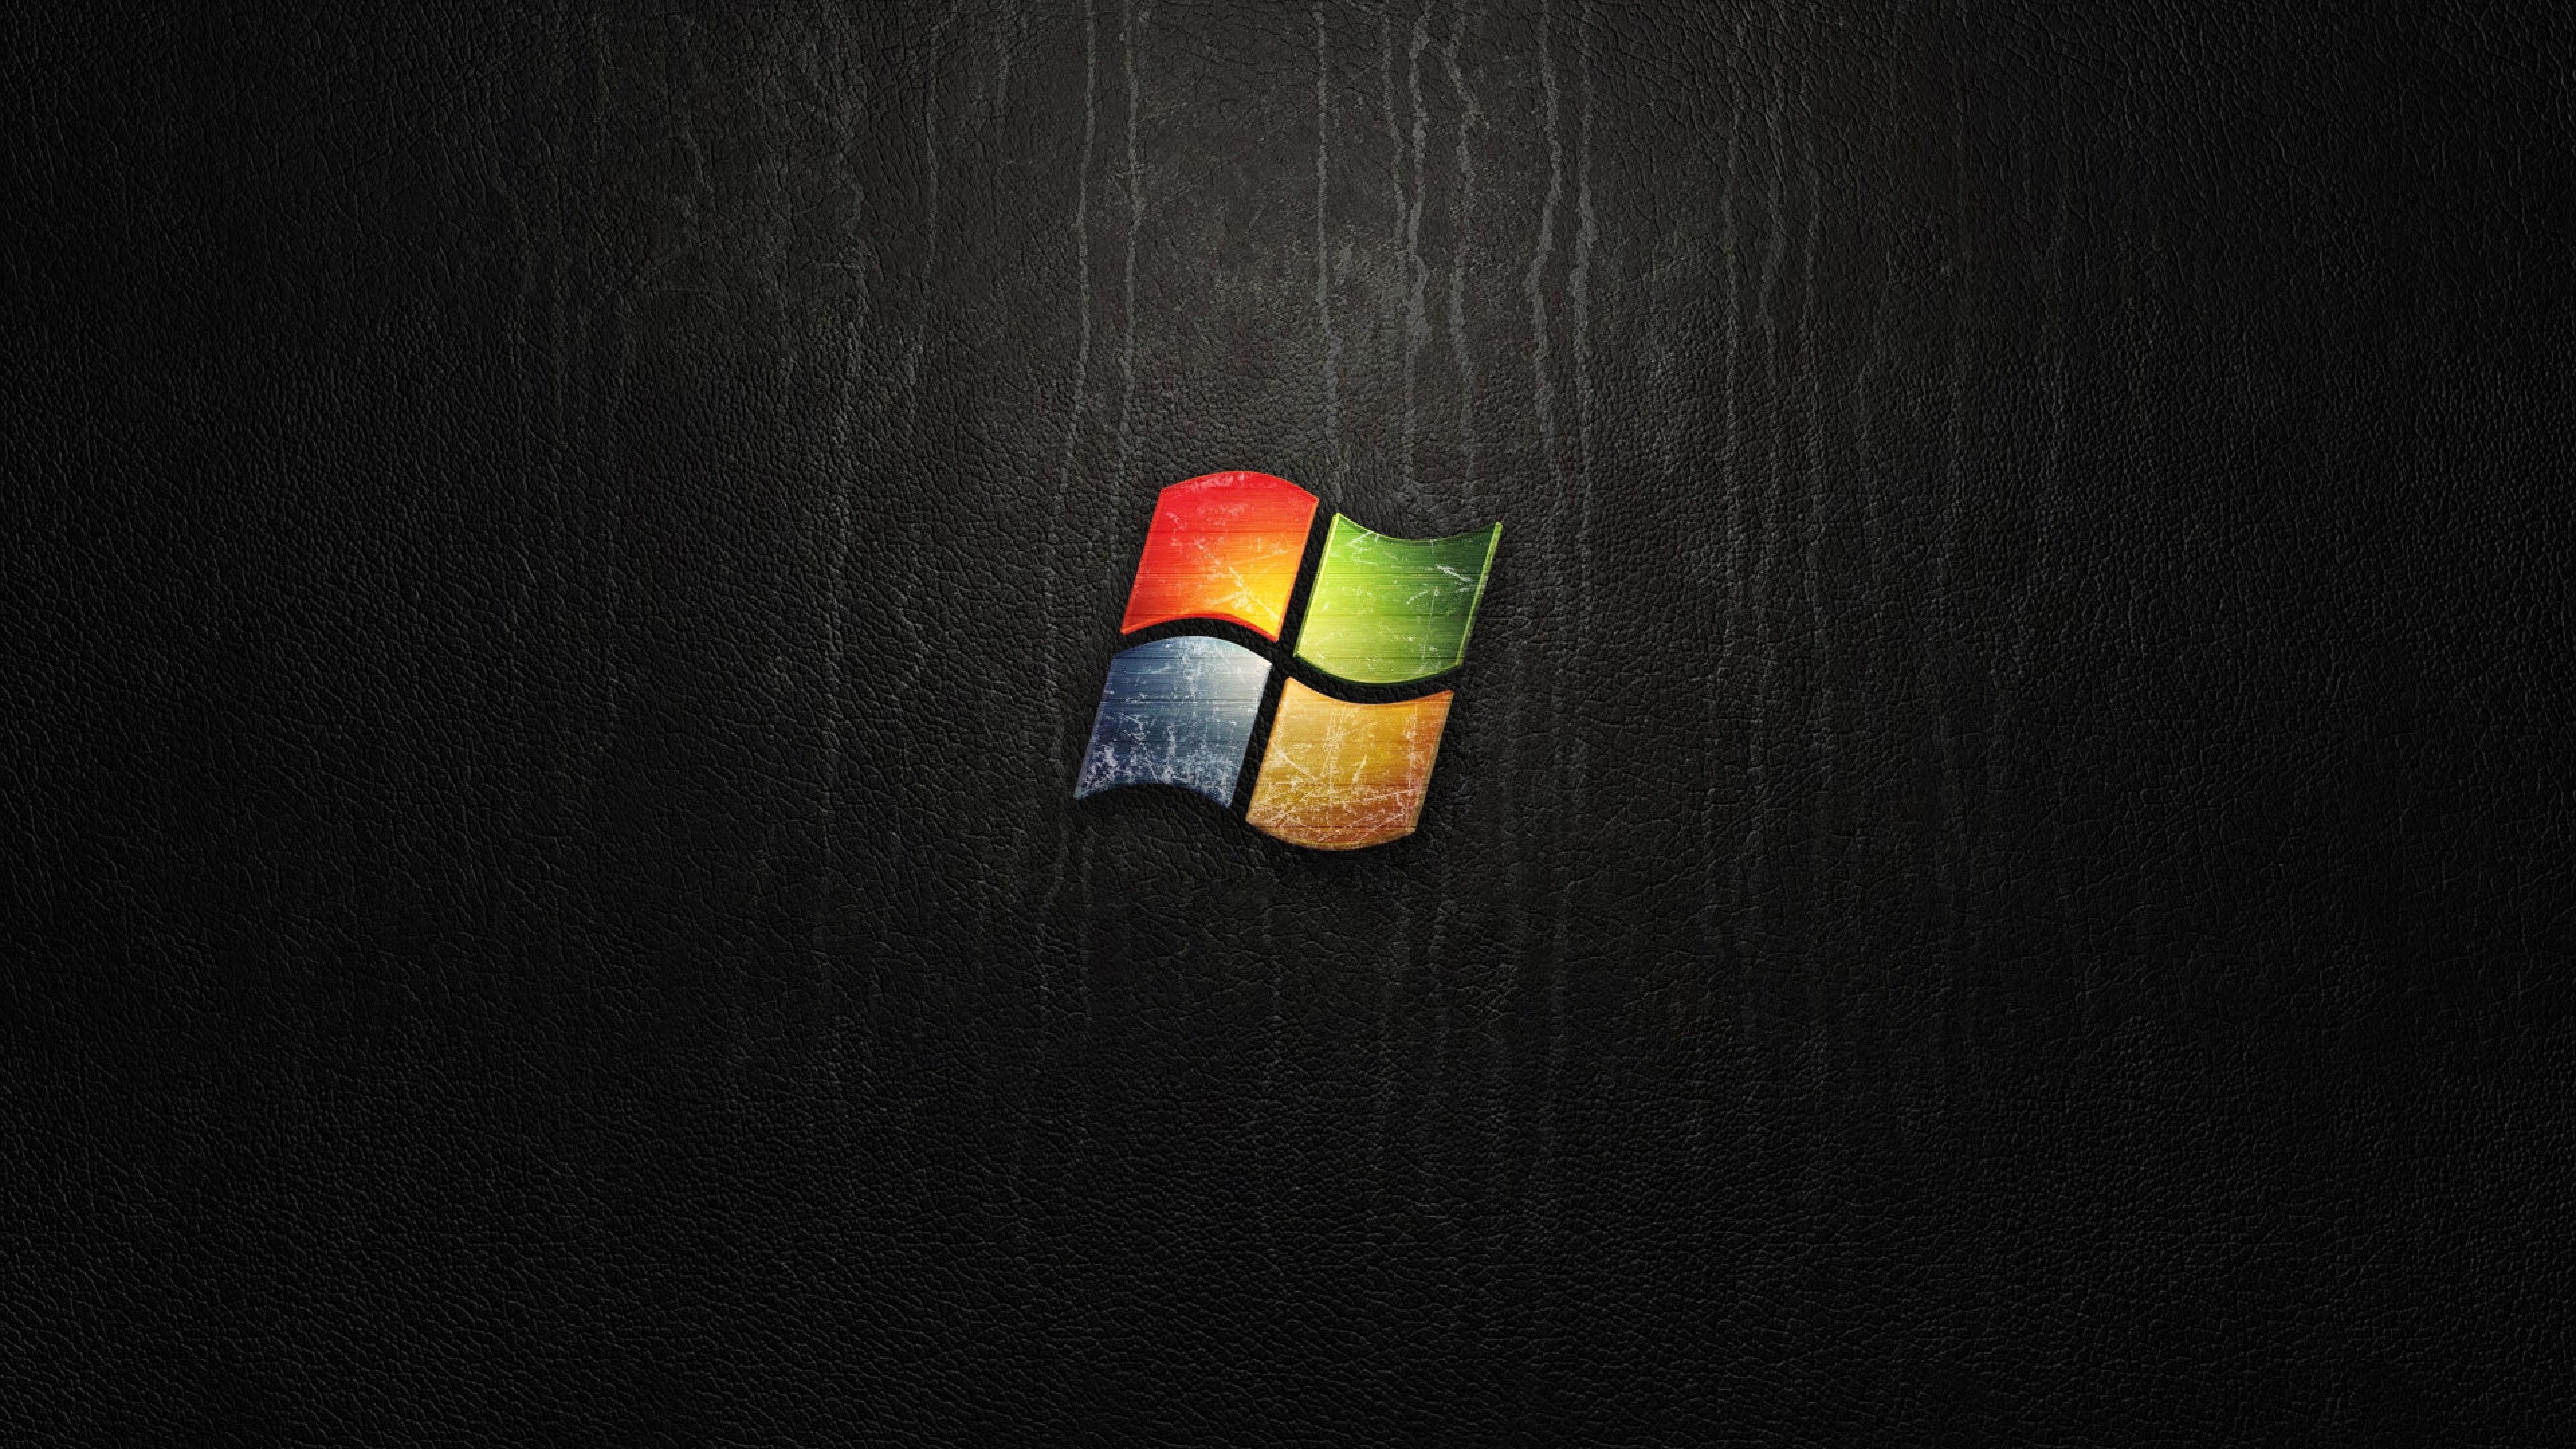 Windows 7 Wallpaper 4k